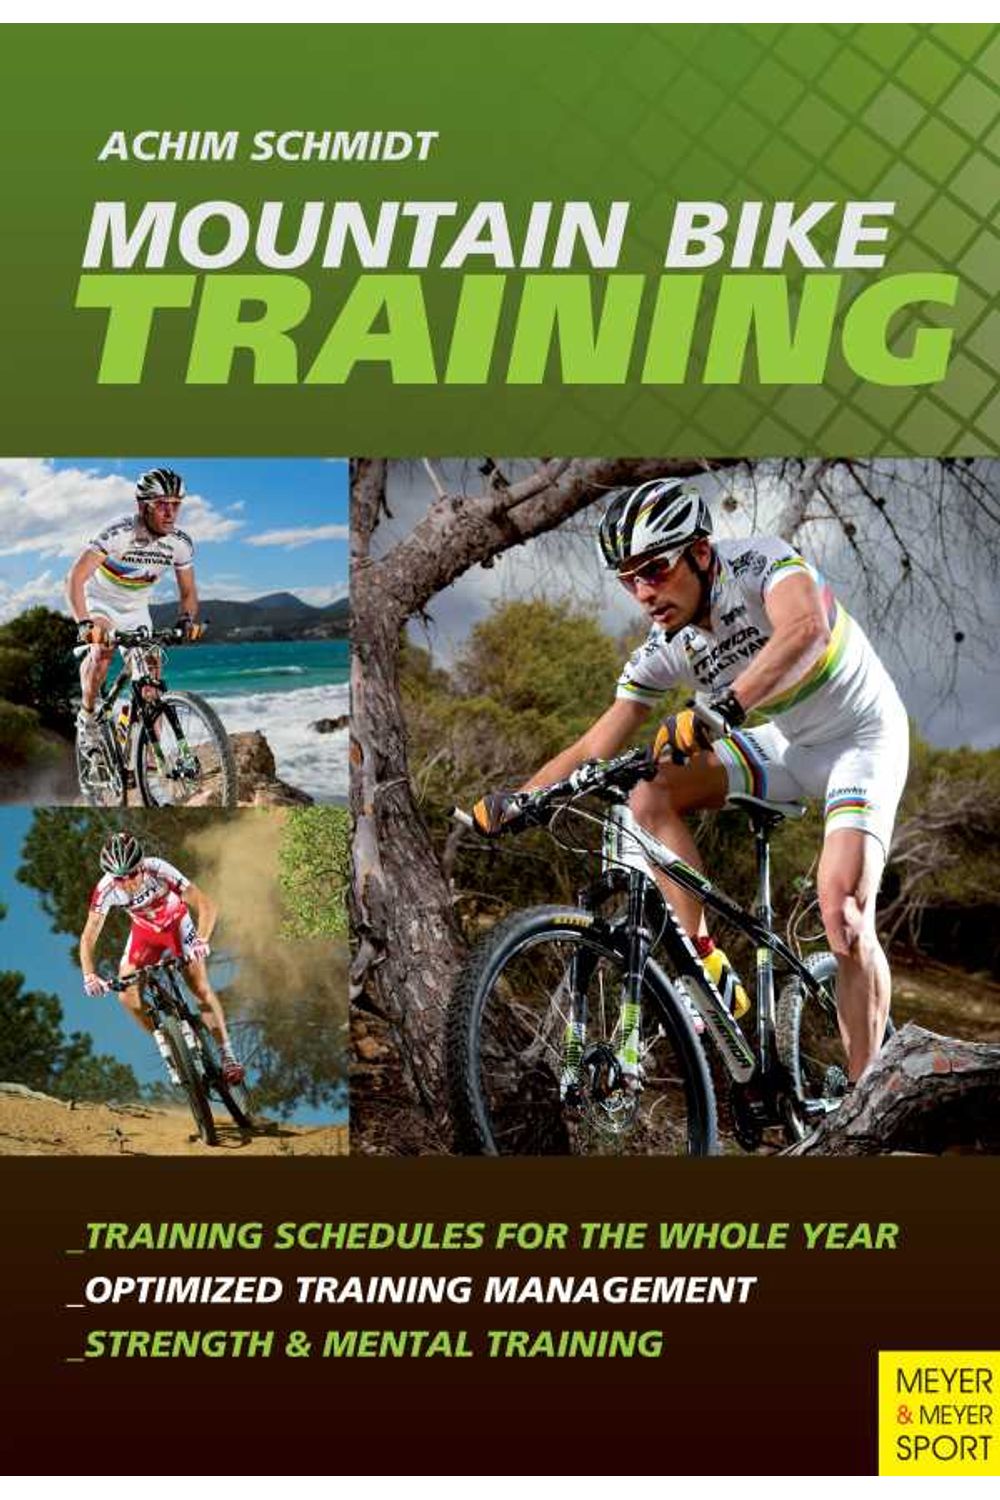 bw-mountain-bike-training-meyer-meyer-sport-9781782556886